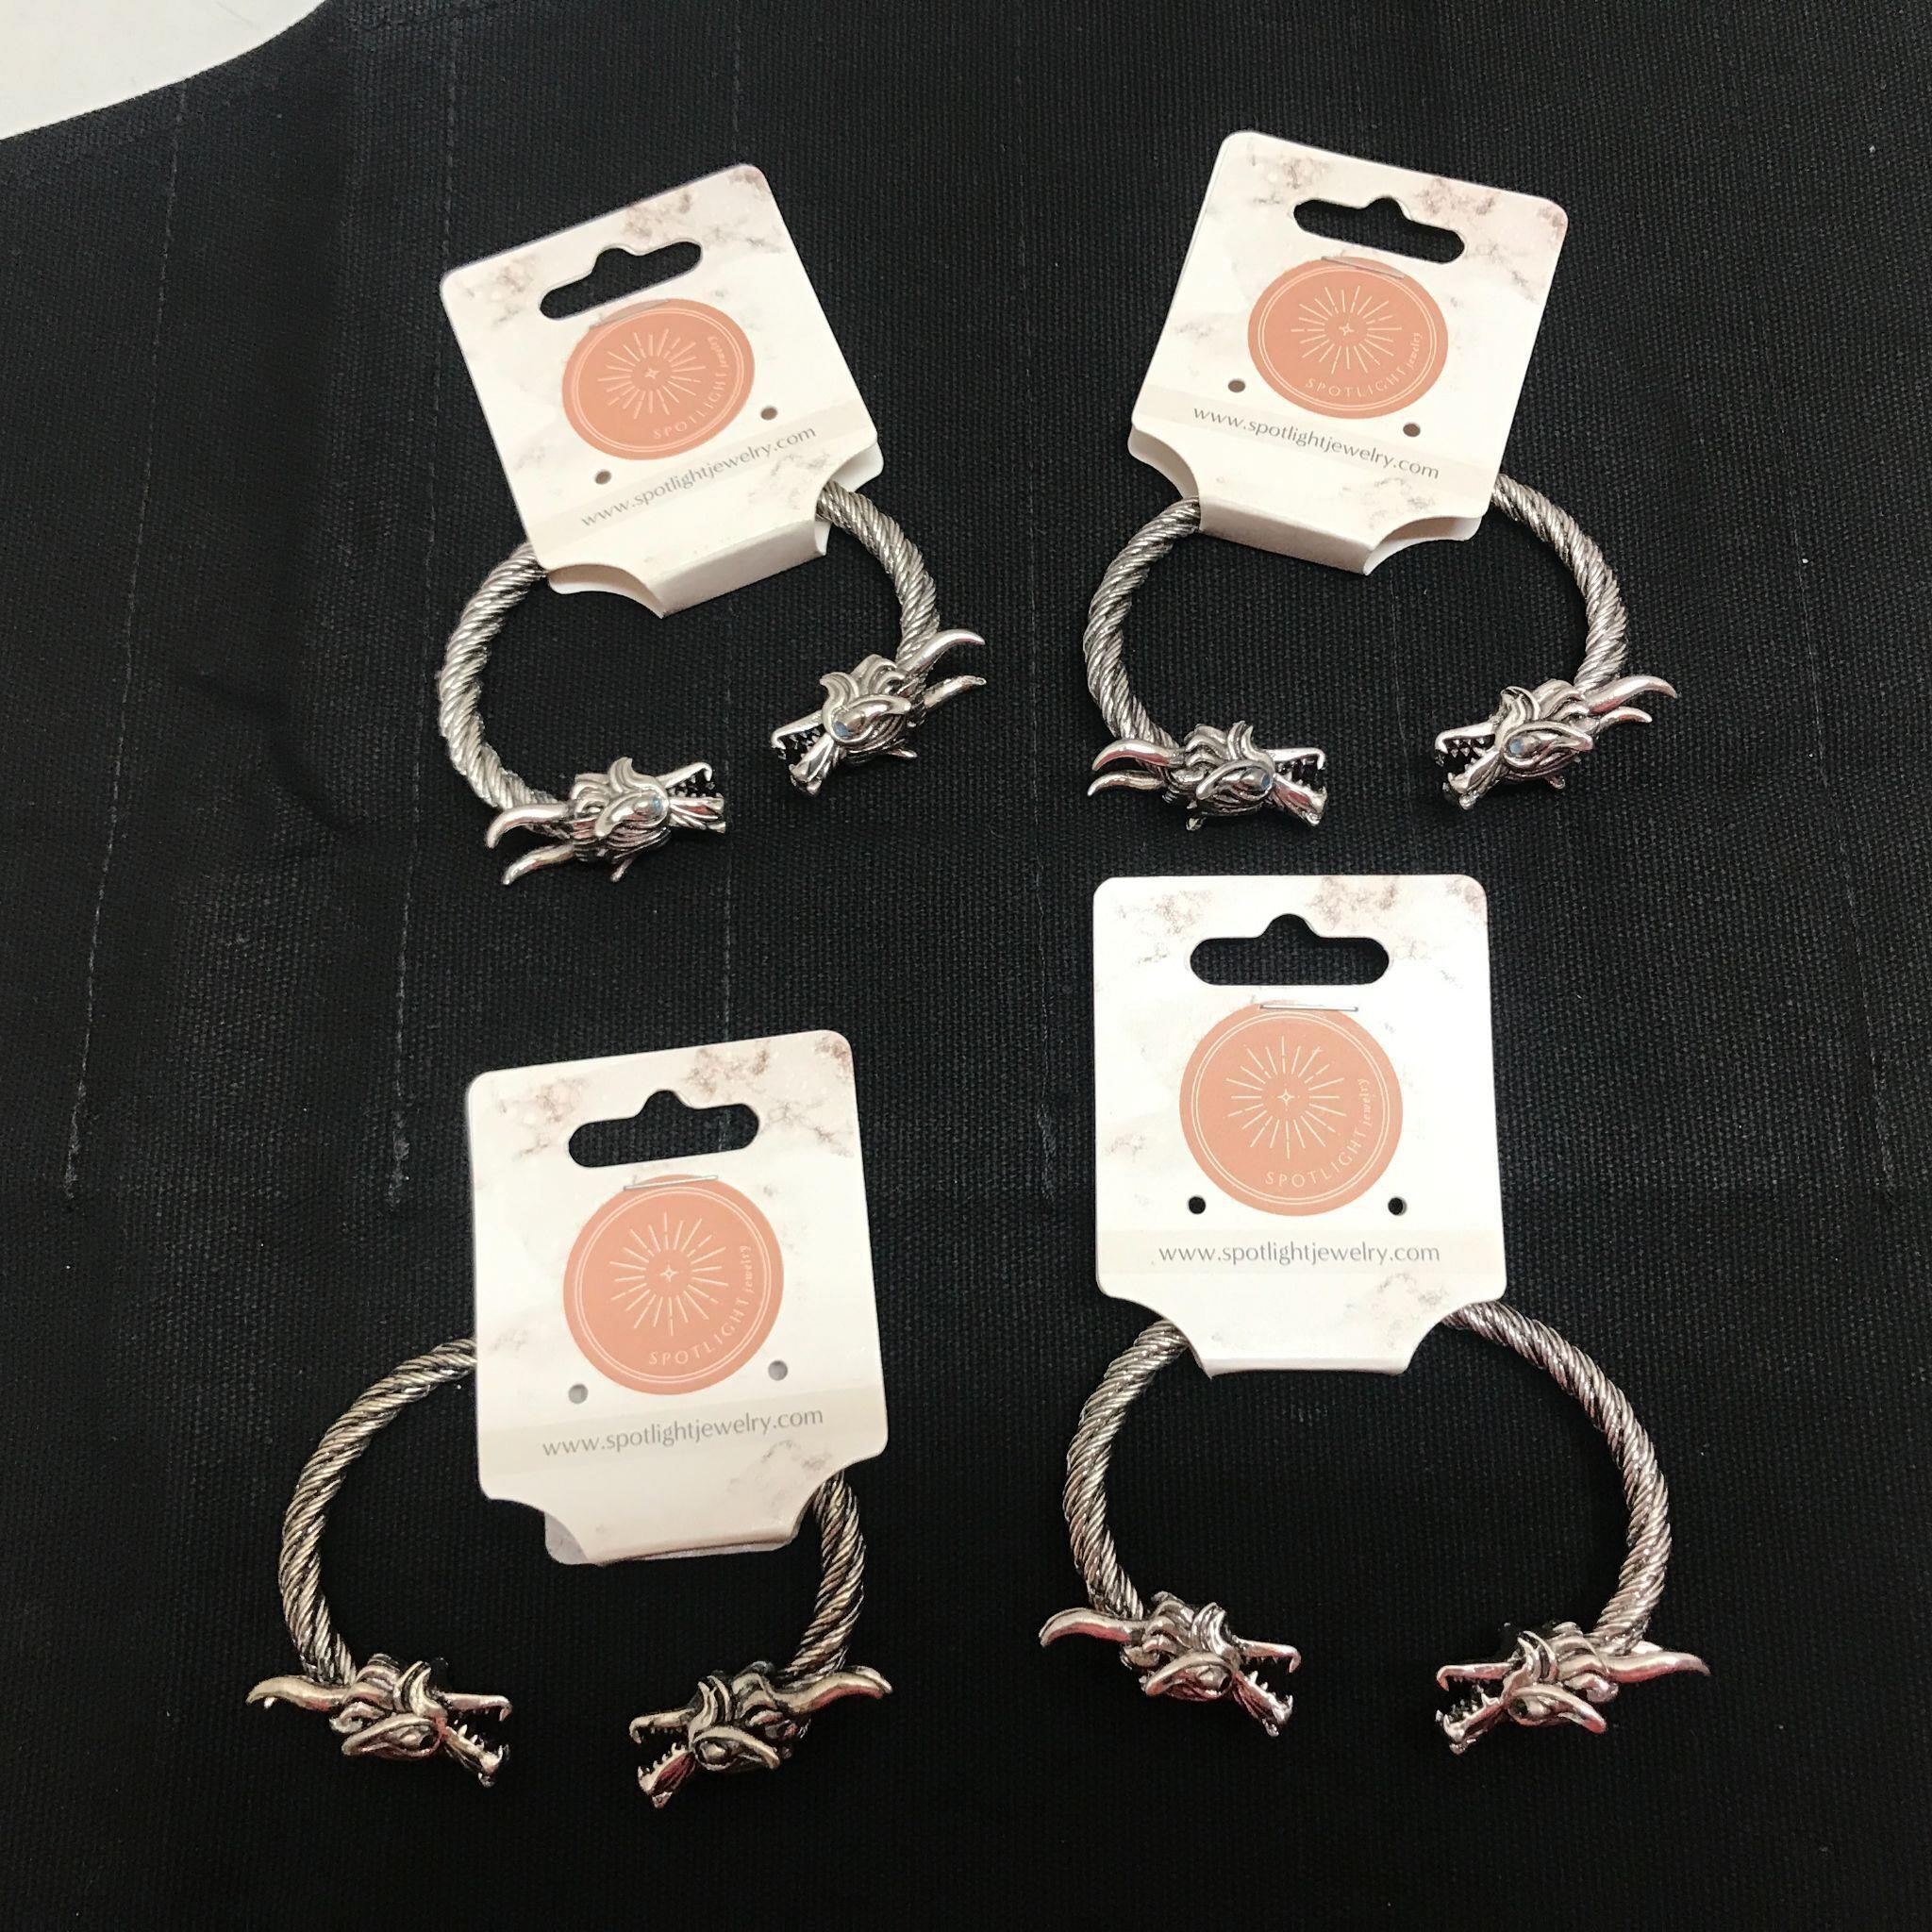 4 New Dragon Cuff Bracelets